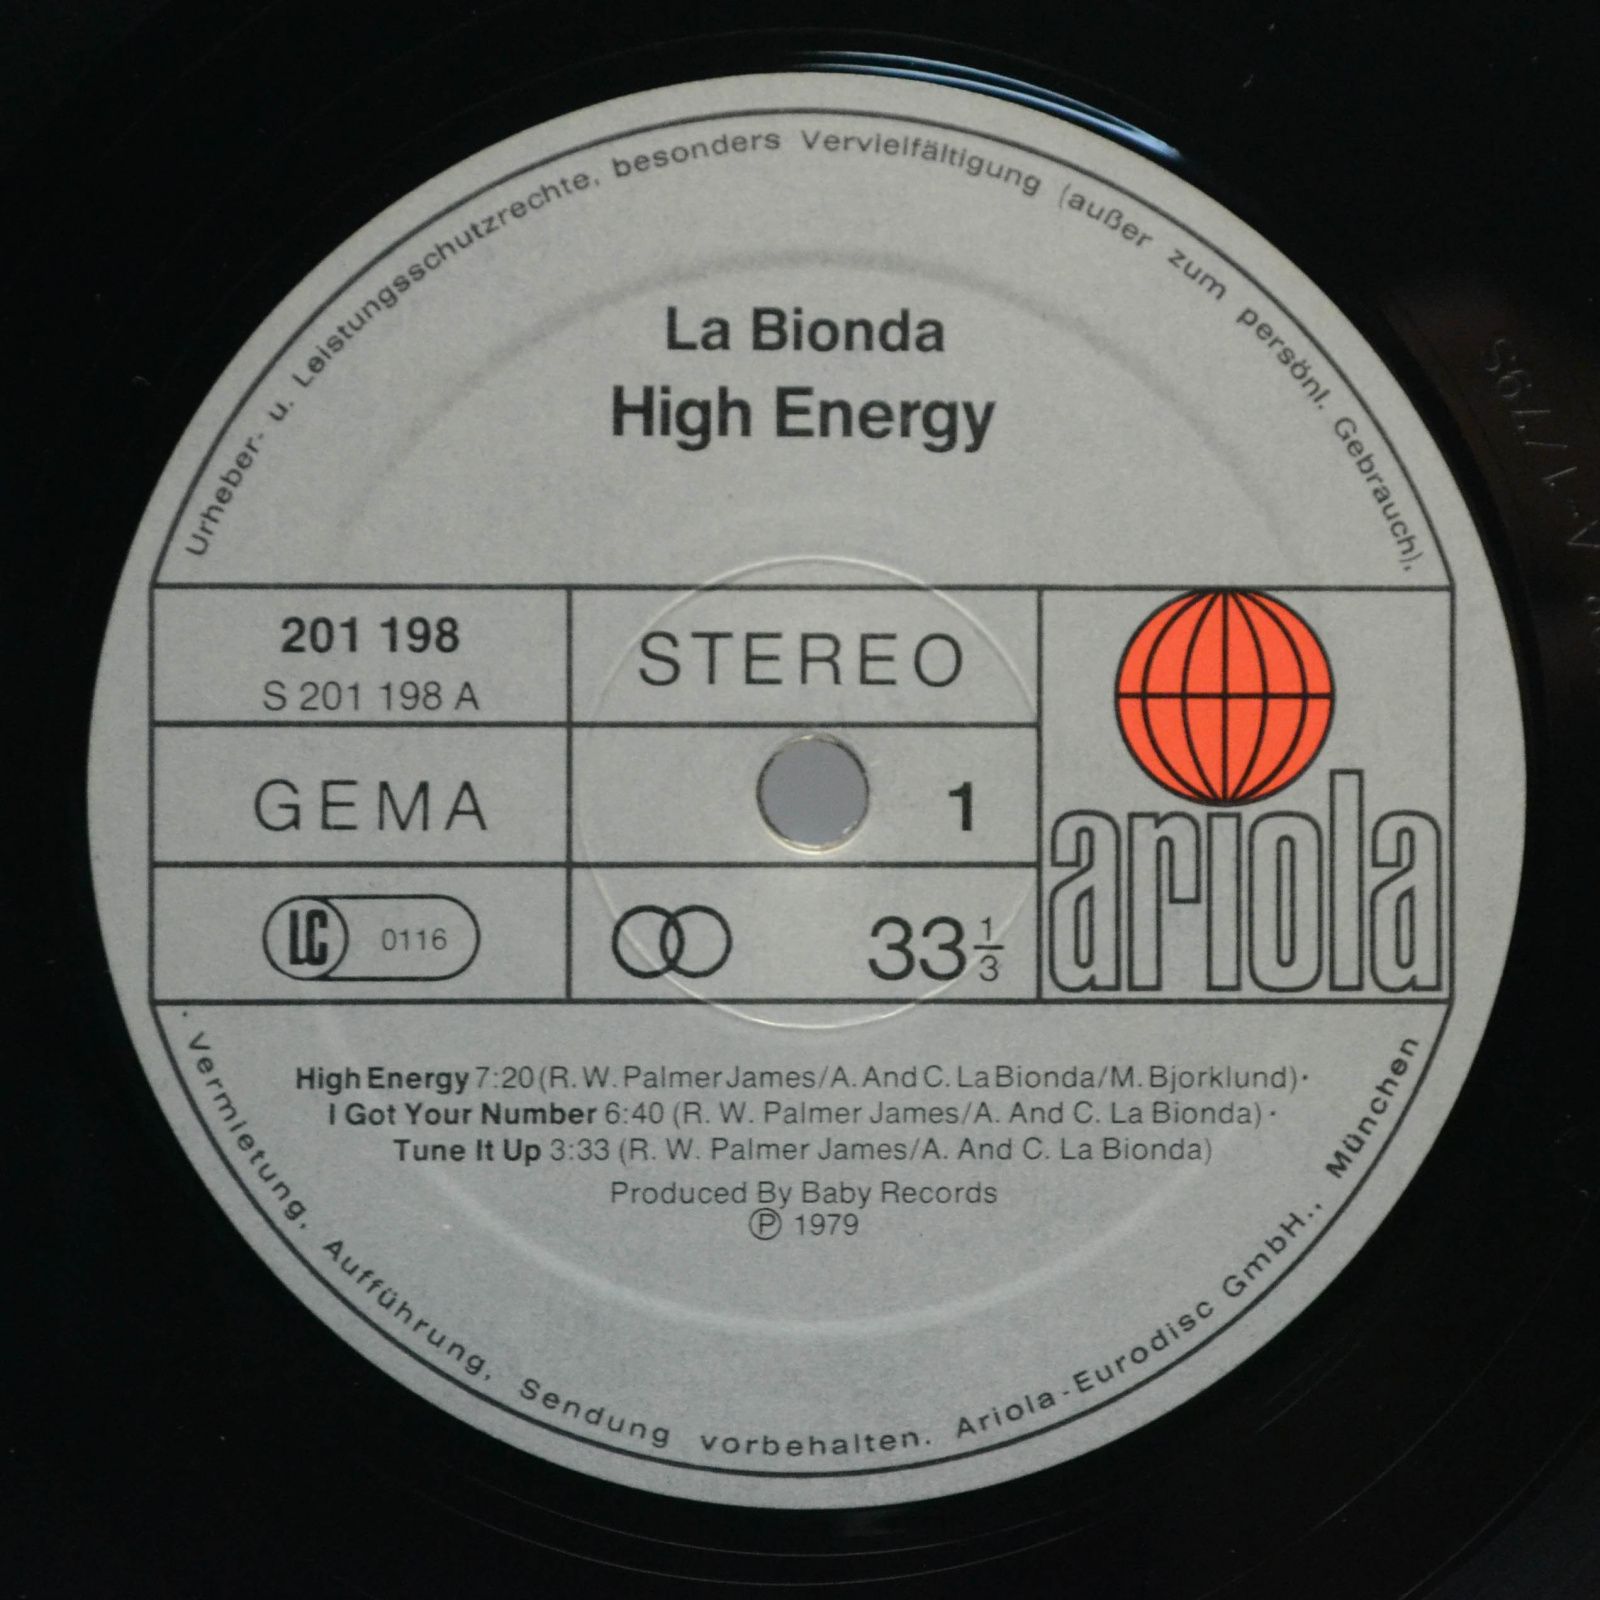 La Bionda — High Energy, 1979